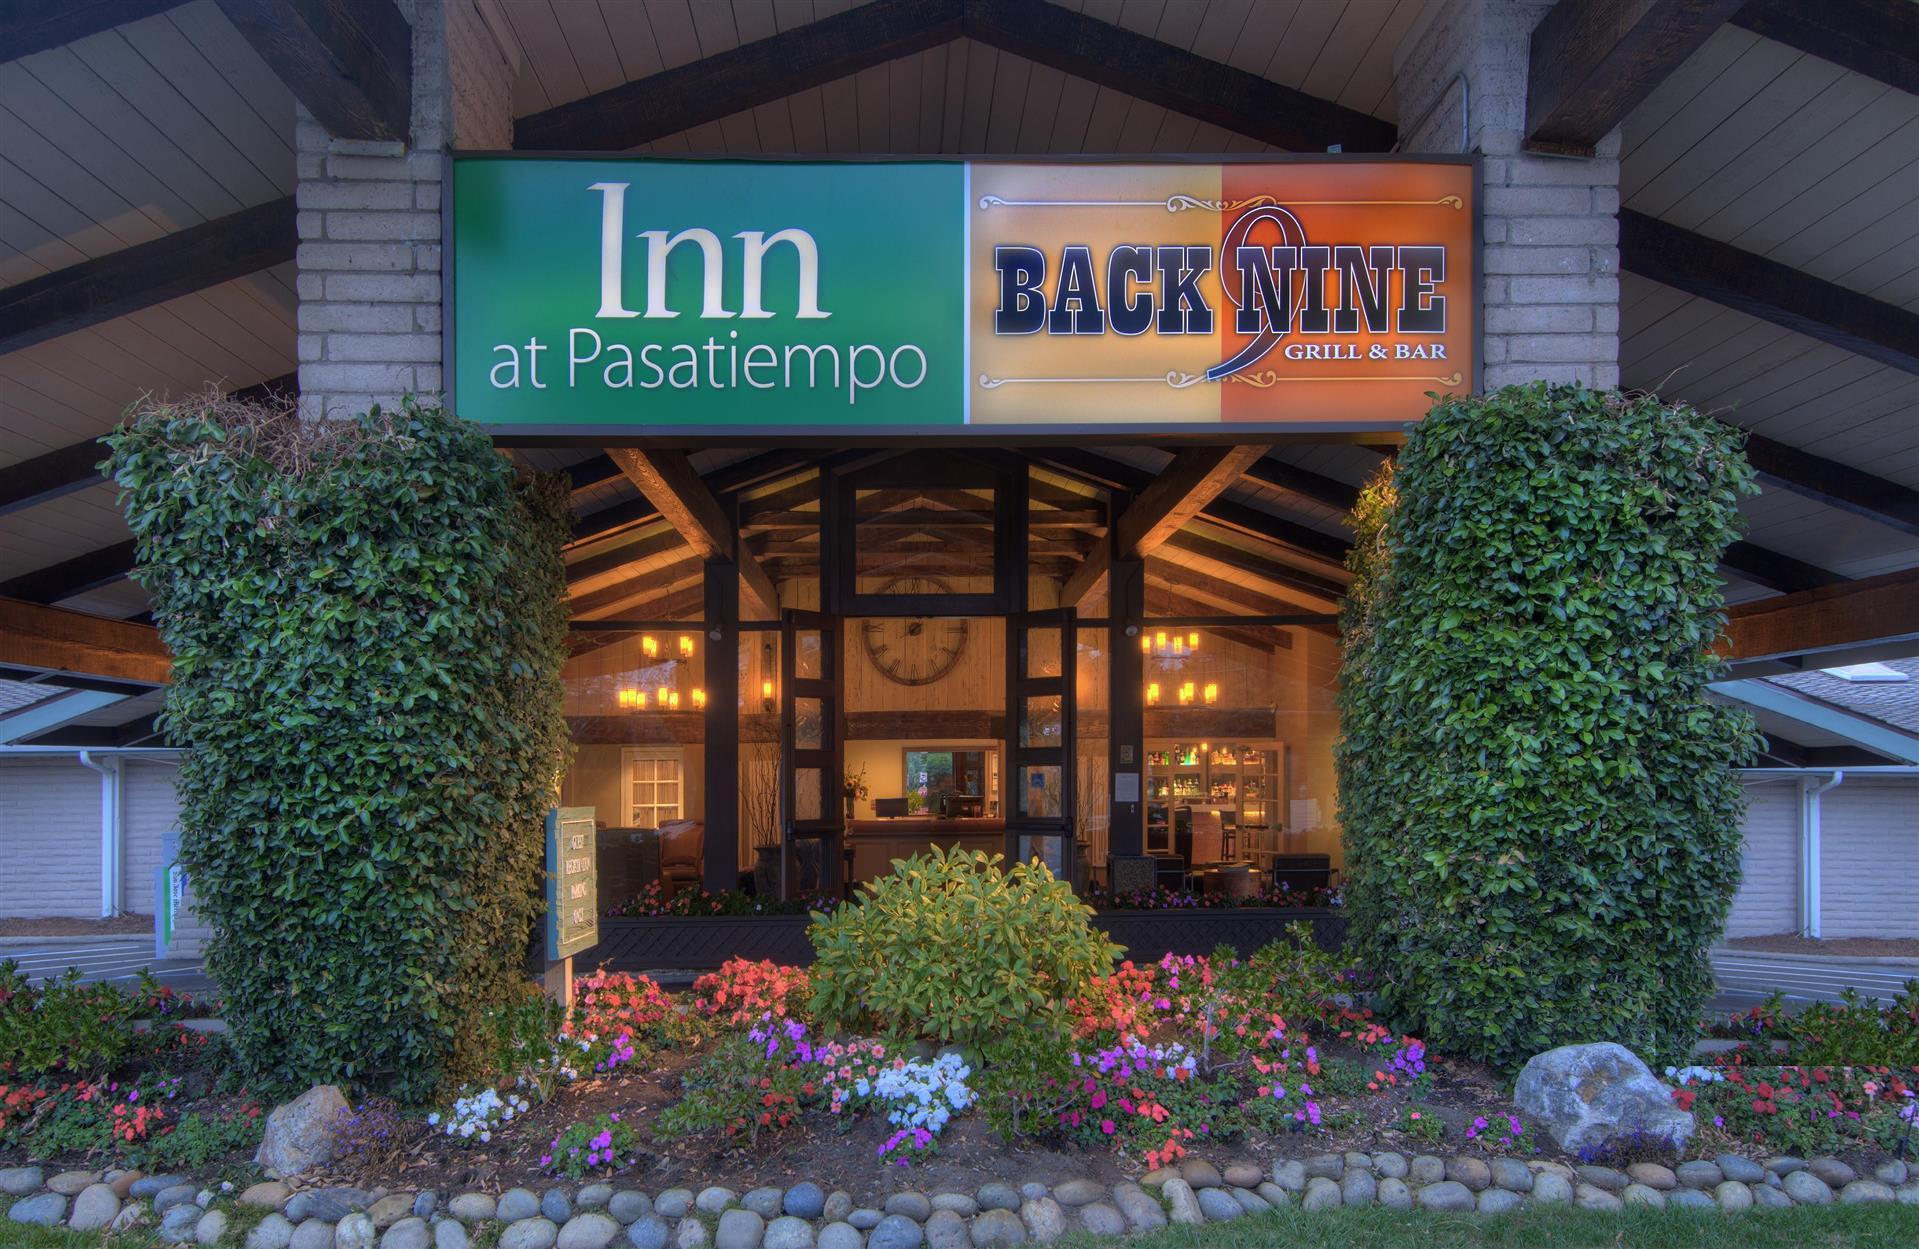 The Inn at Pasatiempo in Santa Cruz, CA